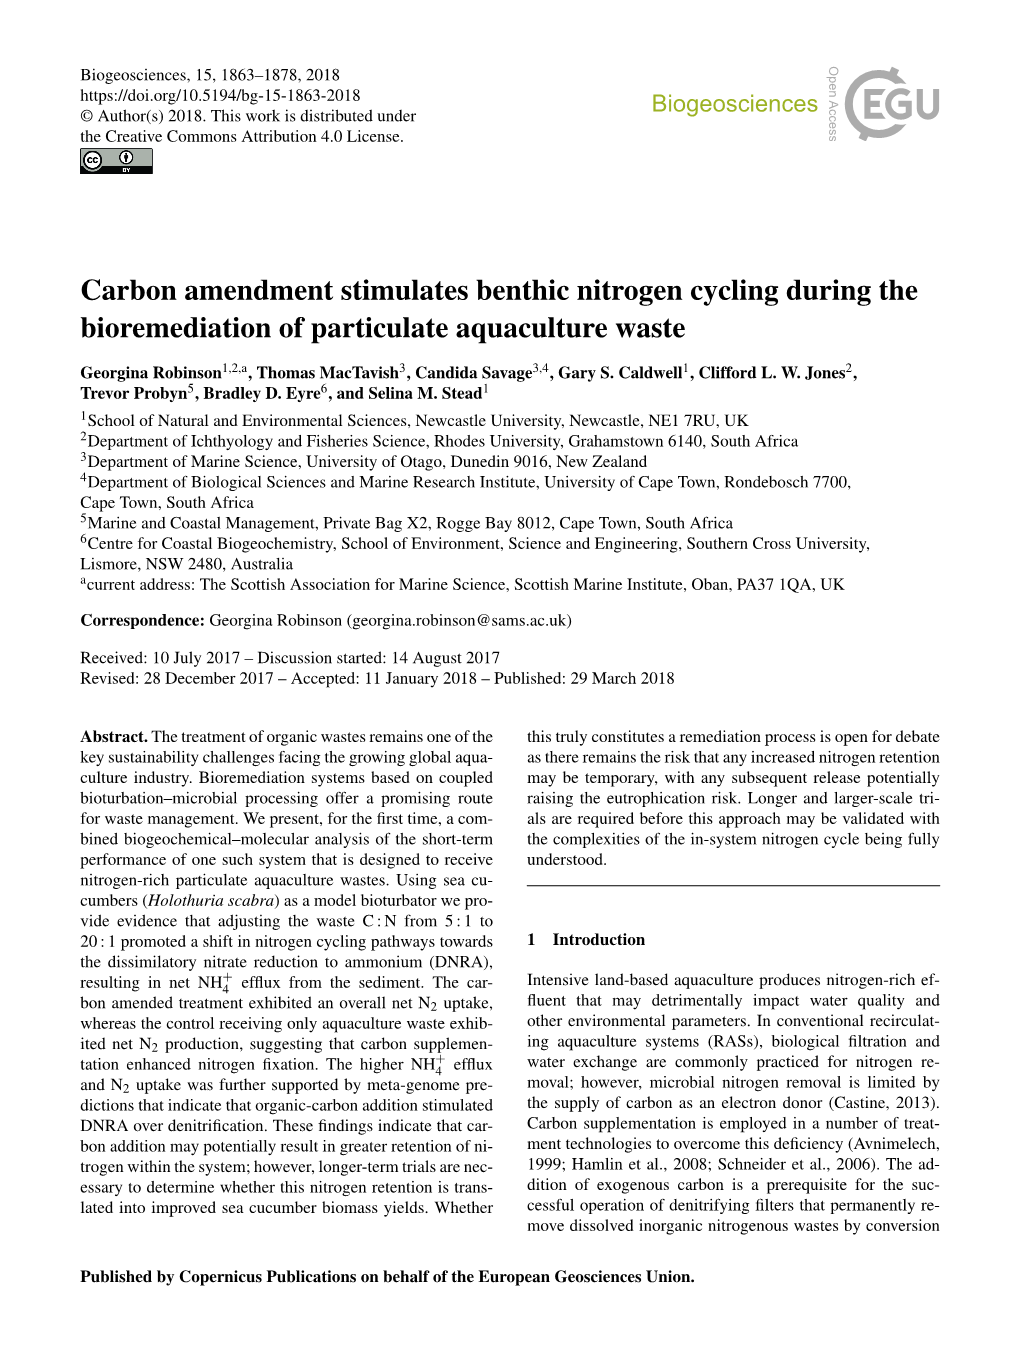 Carbon Amendment Stimulates Benthic Nitrogen Cycling During the Bioremediation of Particulate Aquaculture Waste